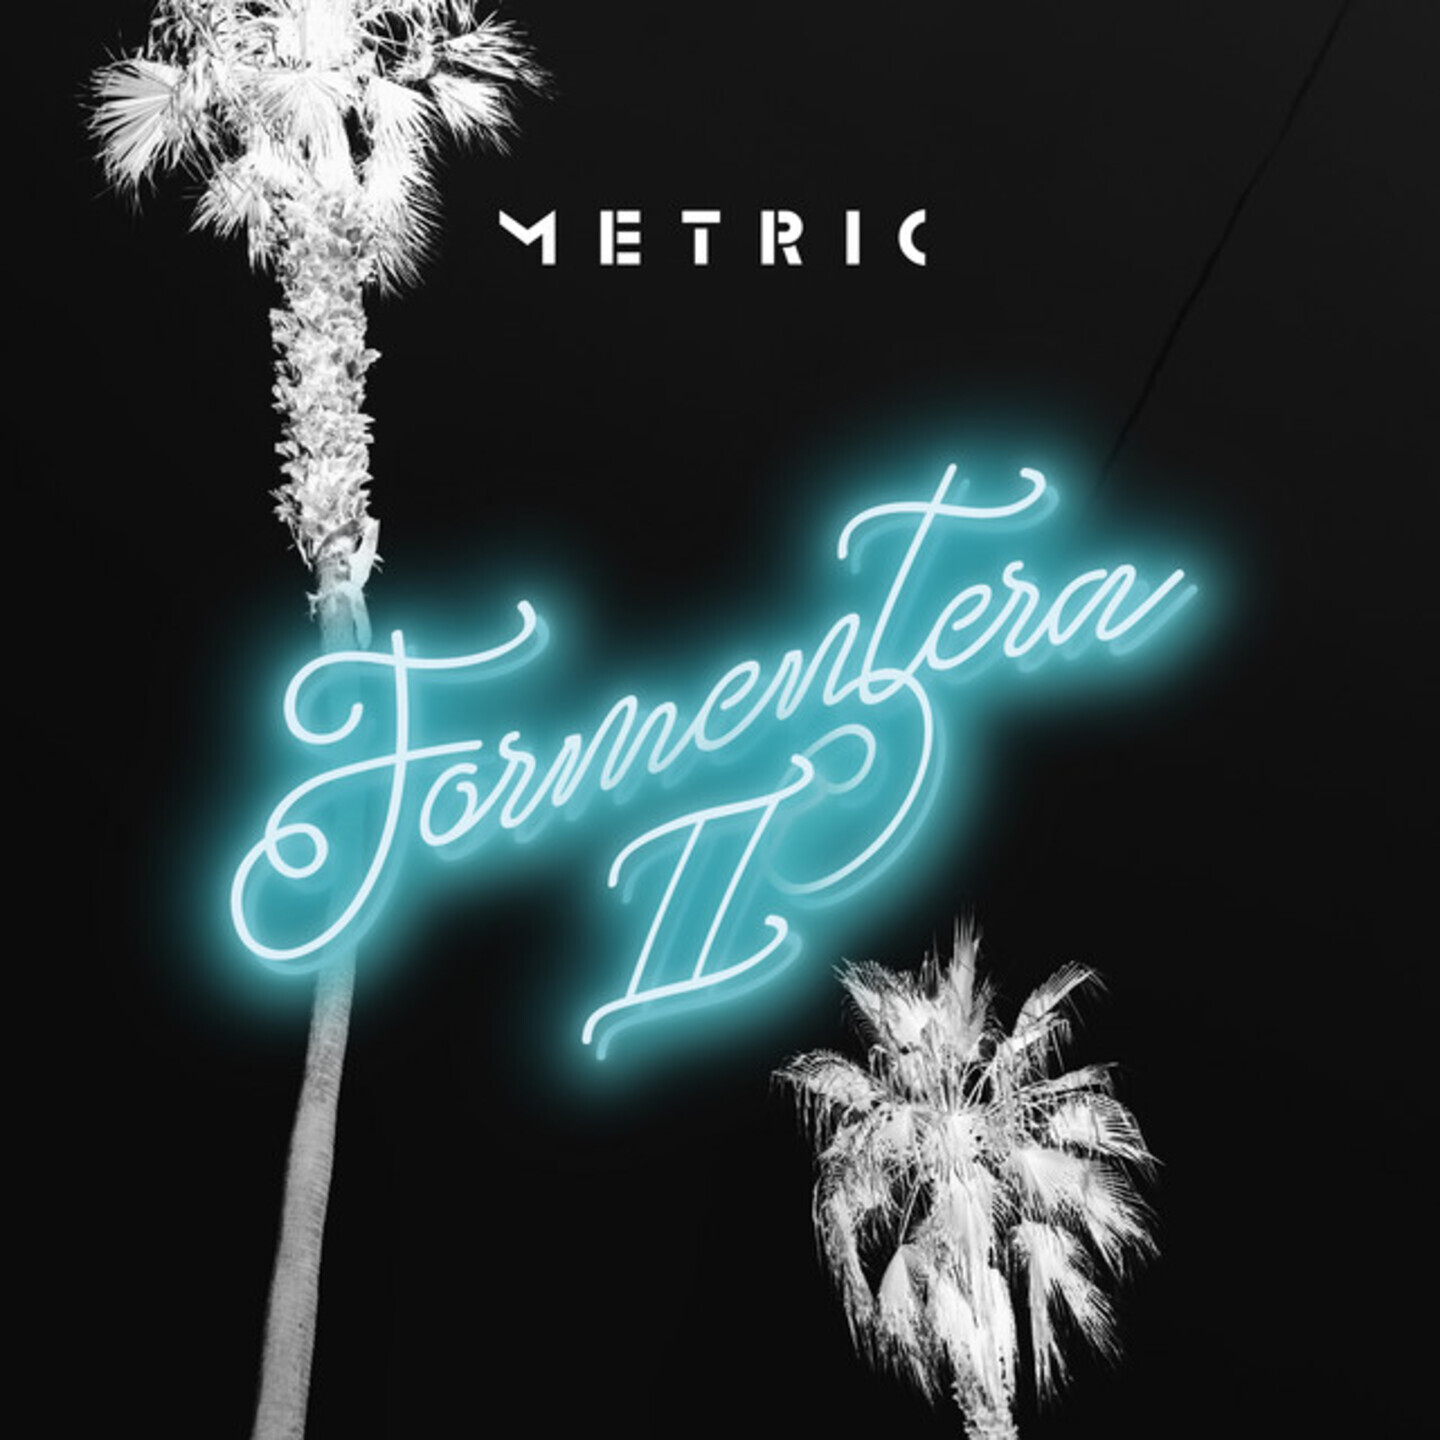 METRIC - Formentera II LP Clear Pink vinyl